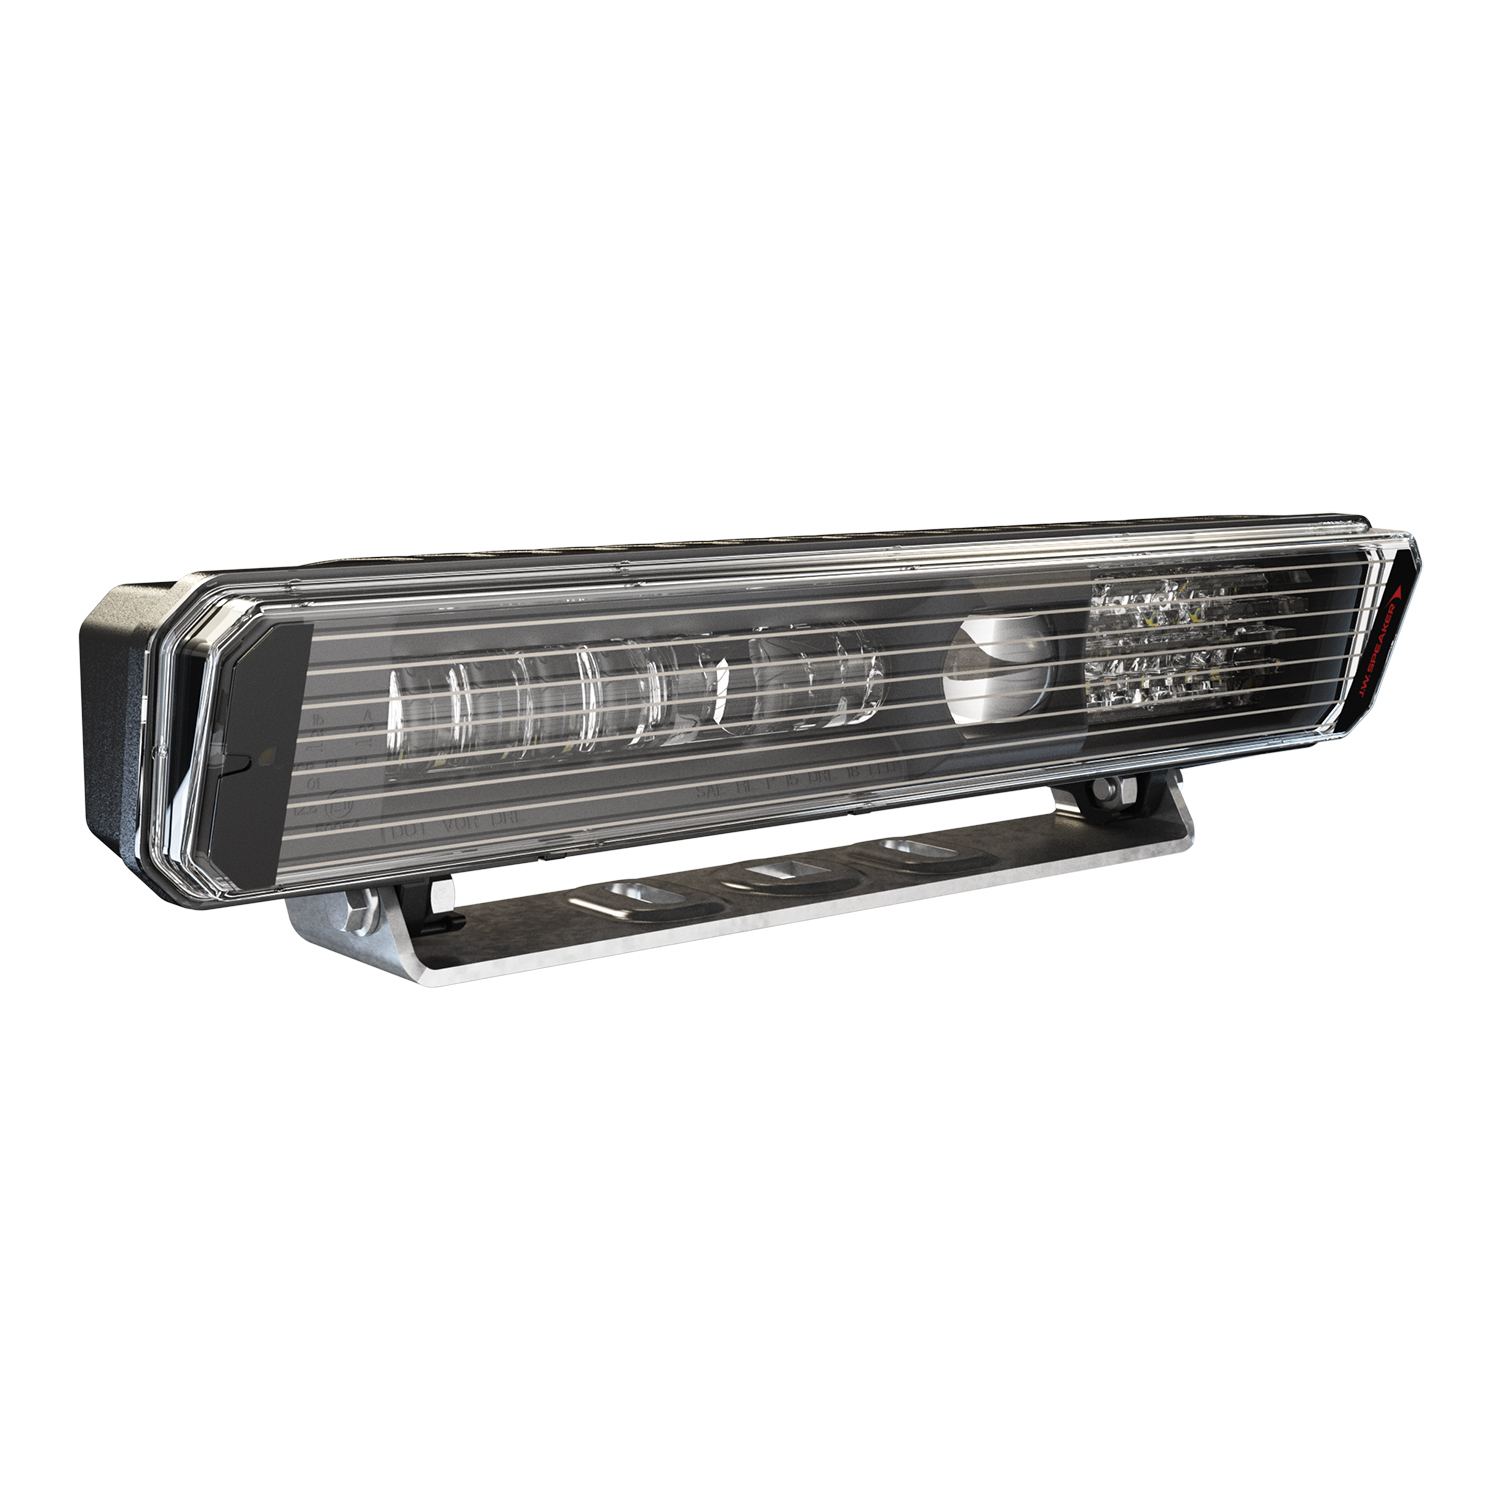 LED Headlight Model 9900 RH Low Profile Heated 3/4 View